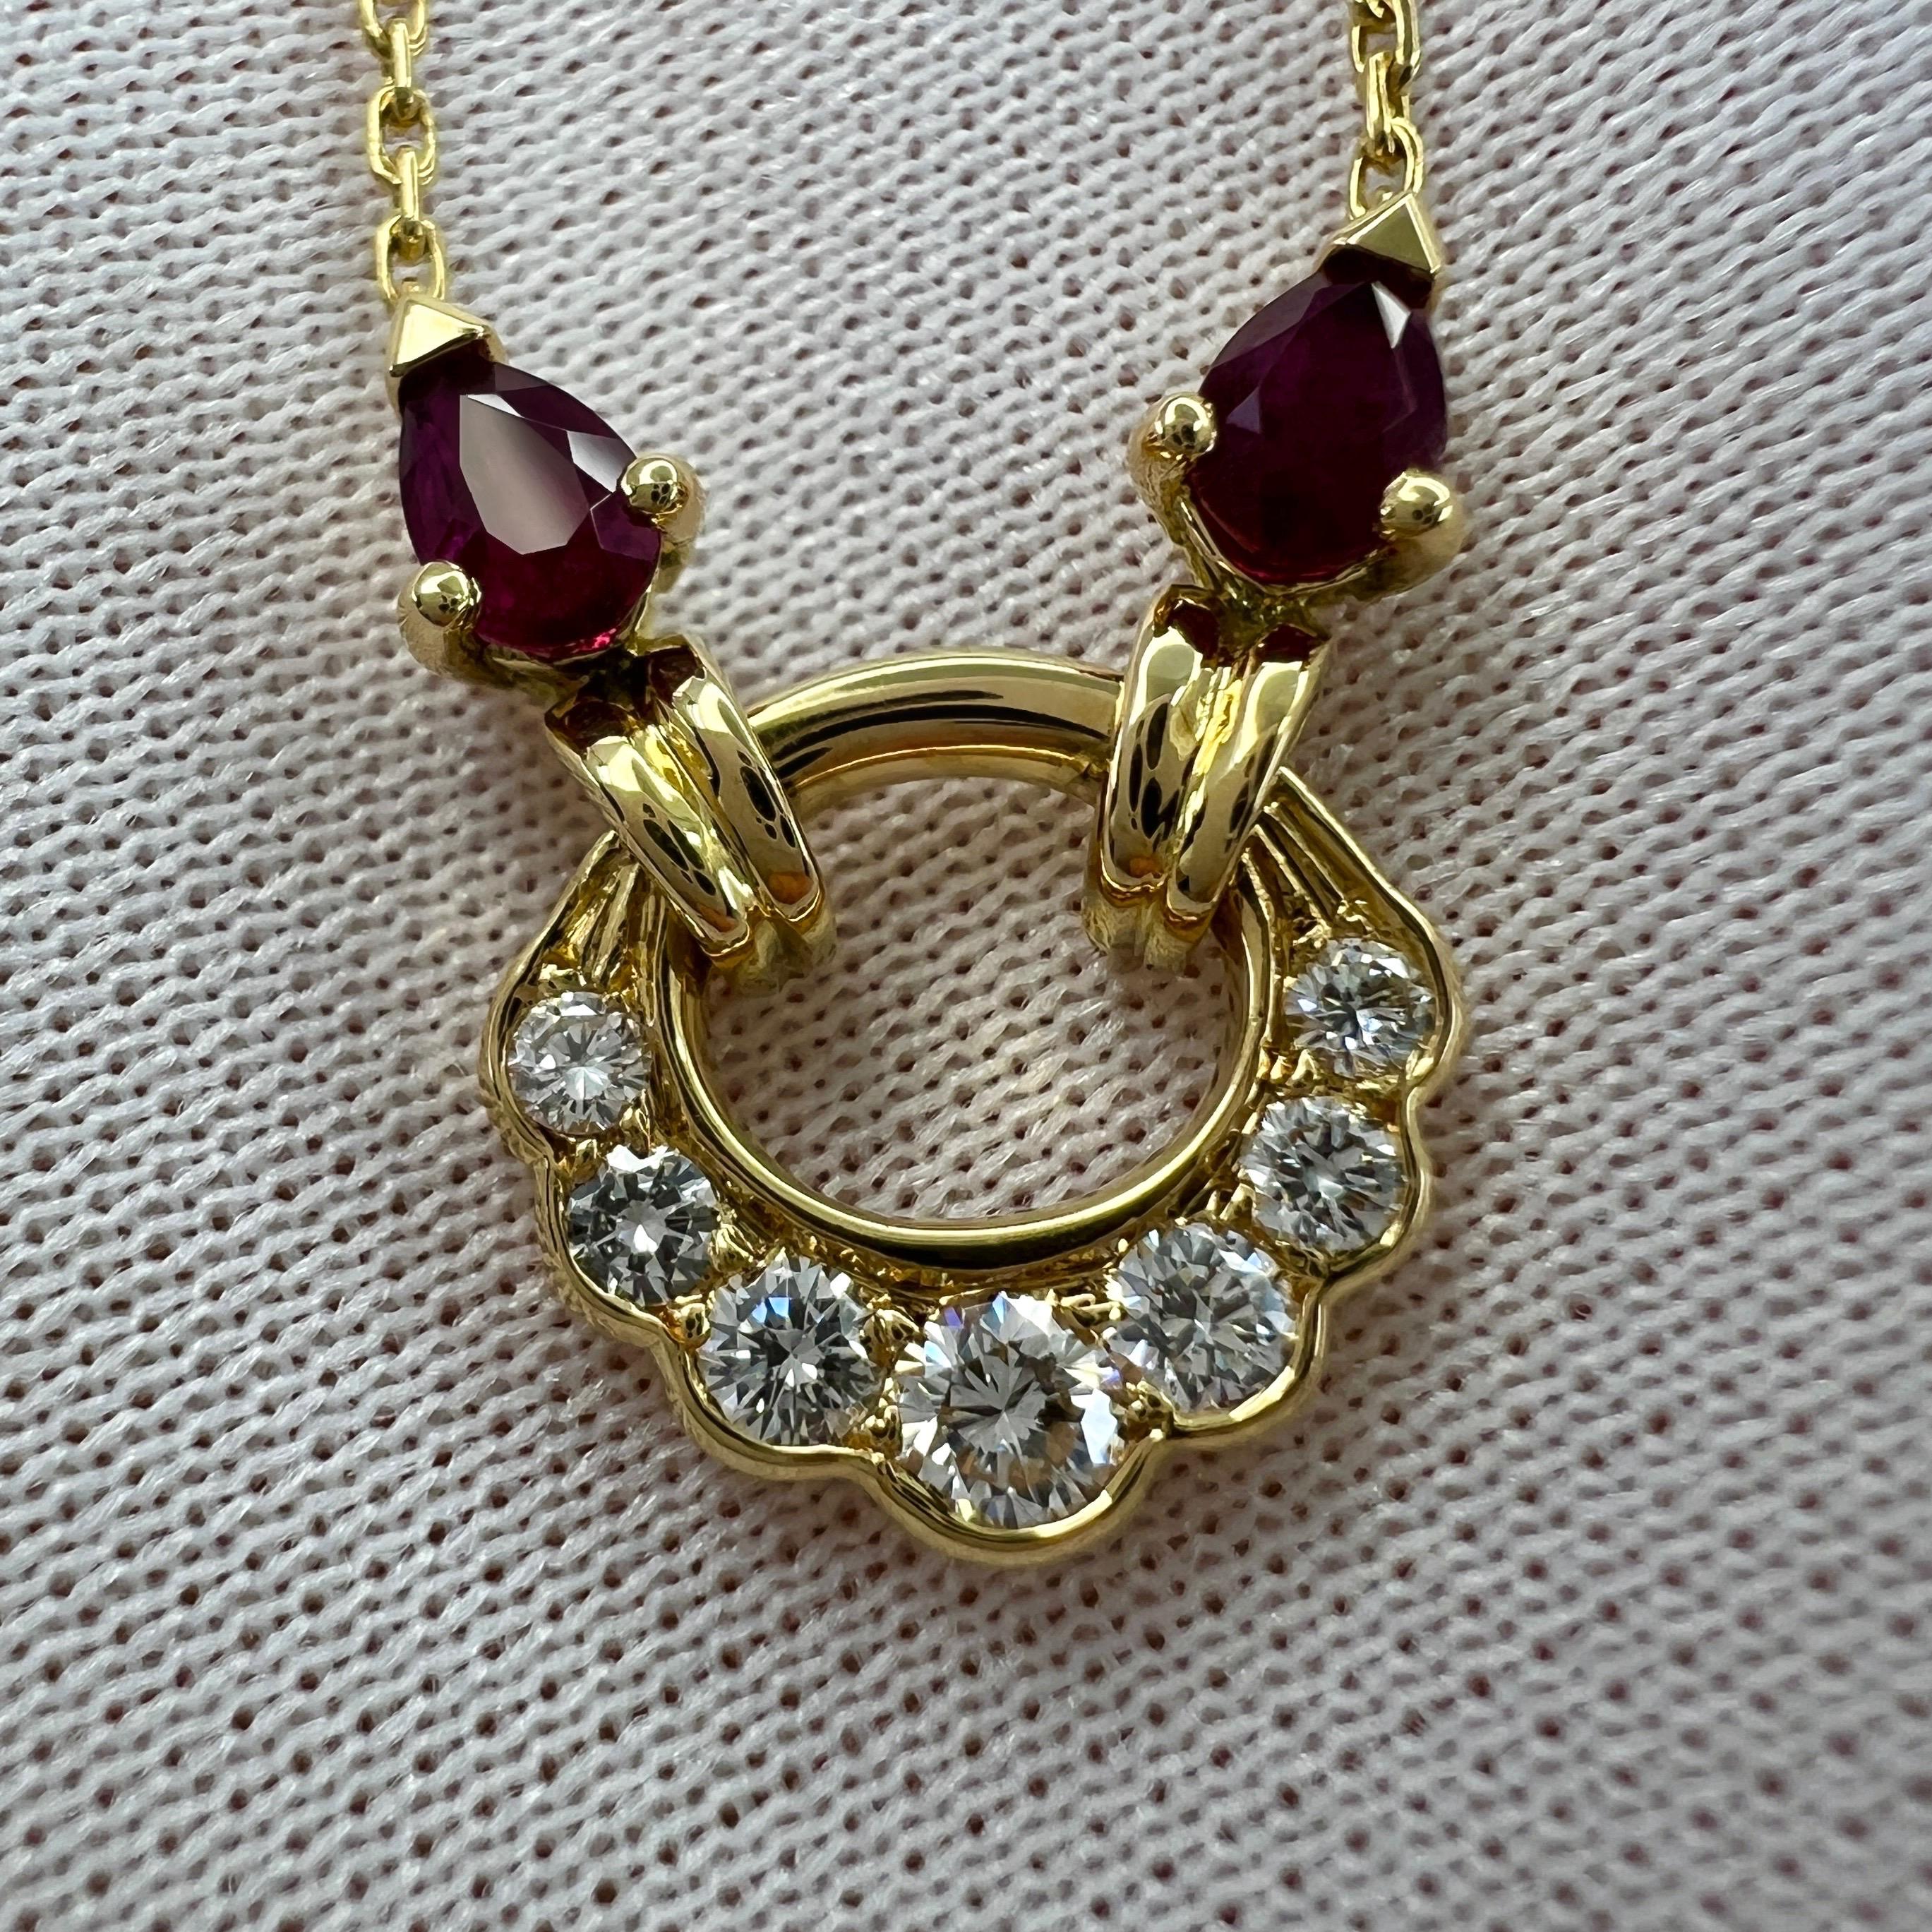 Rare Vintage Van Cleef & Arpels Ruby Diamond 18k Yellow Gold Pendant Necklace For Sale 5